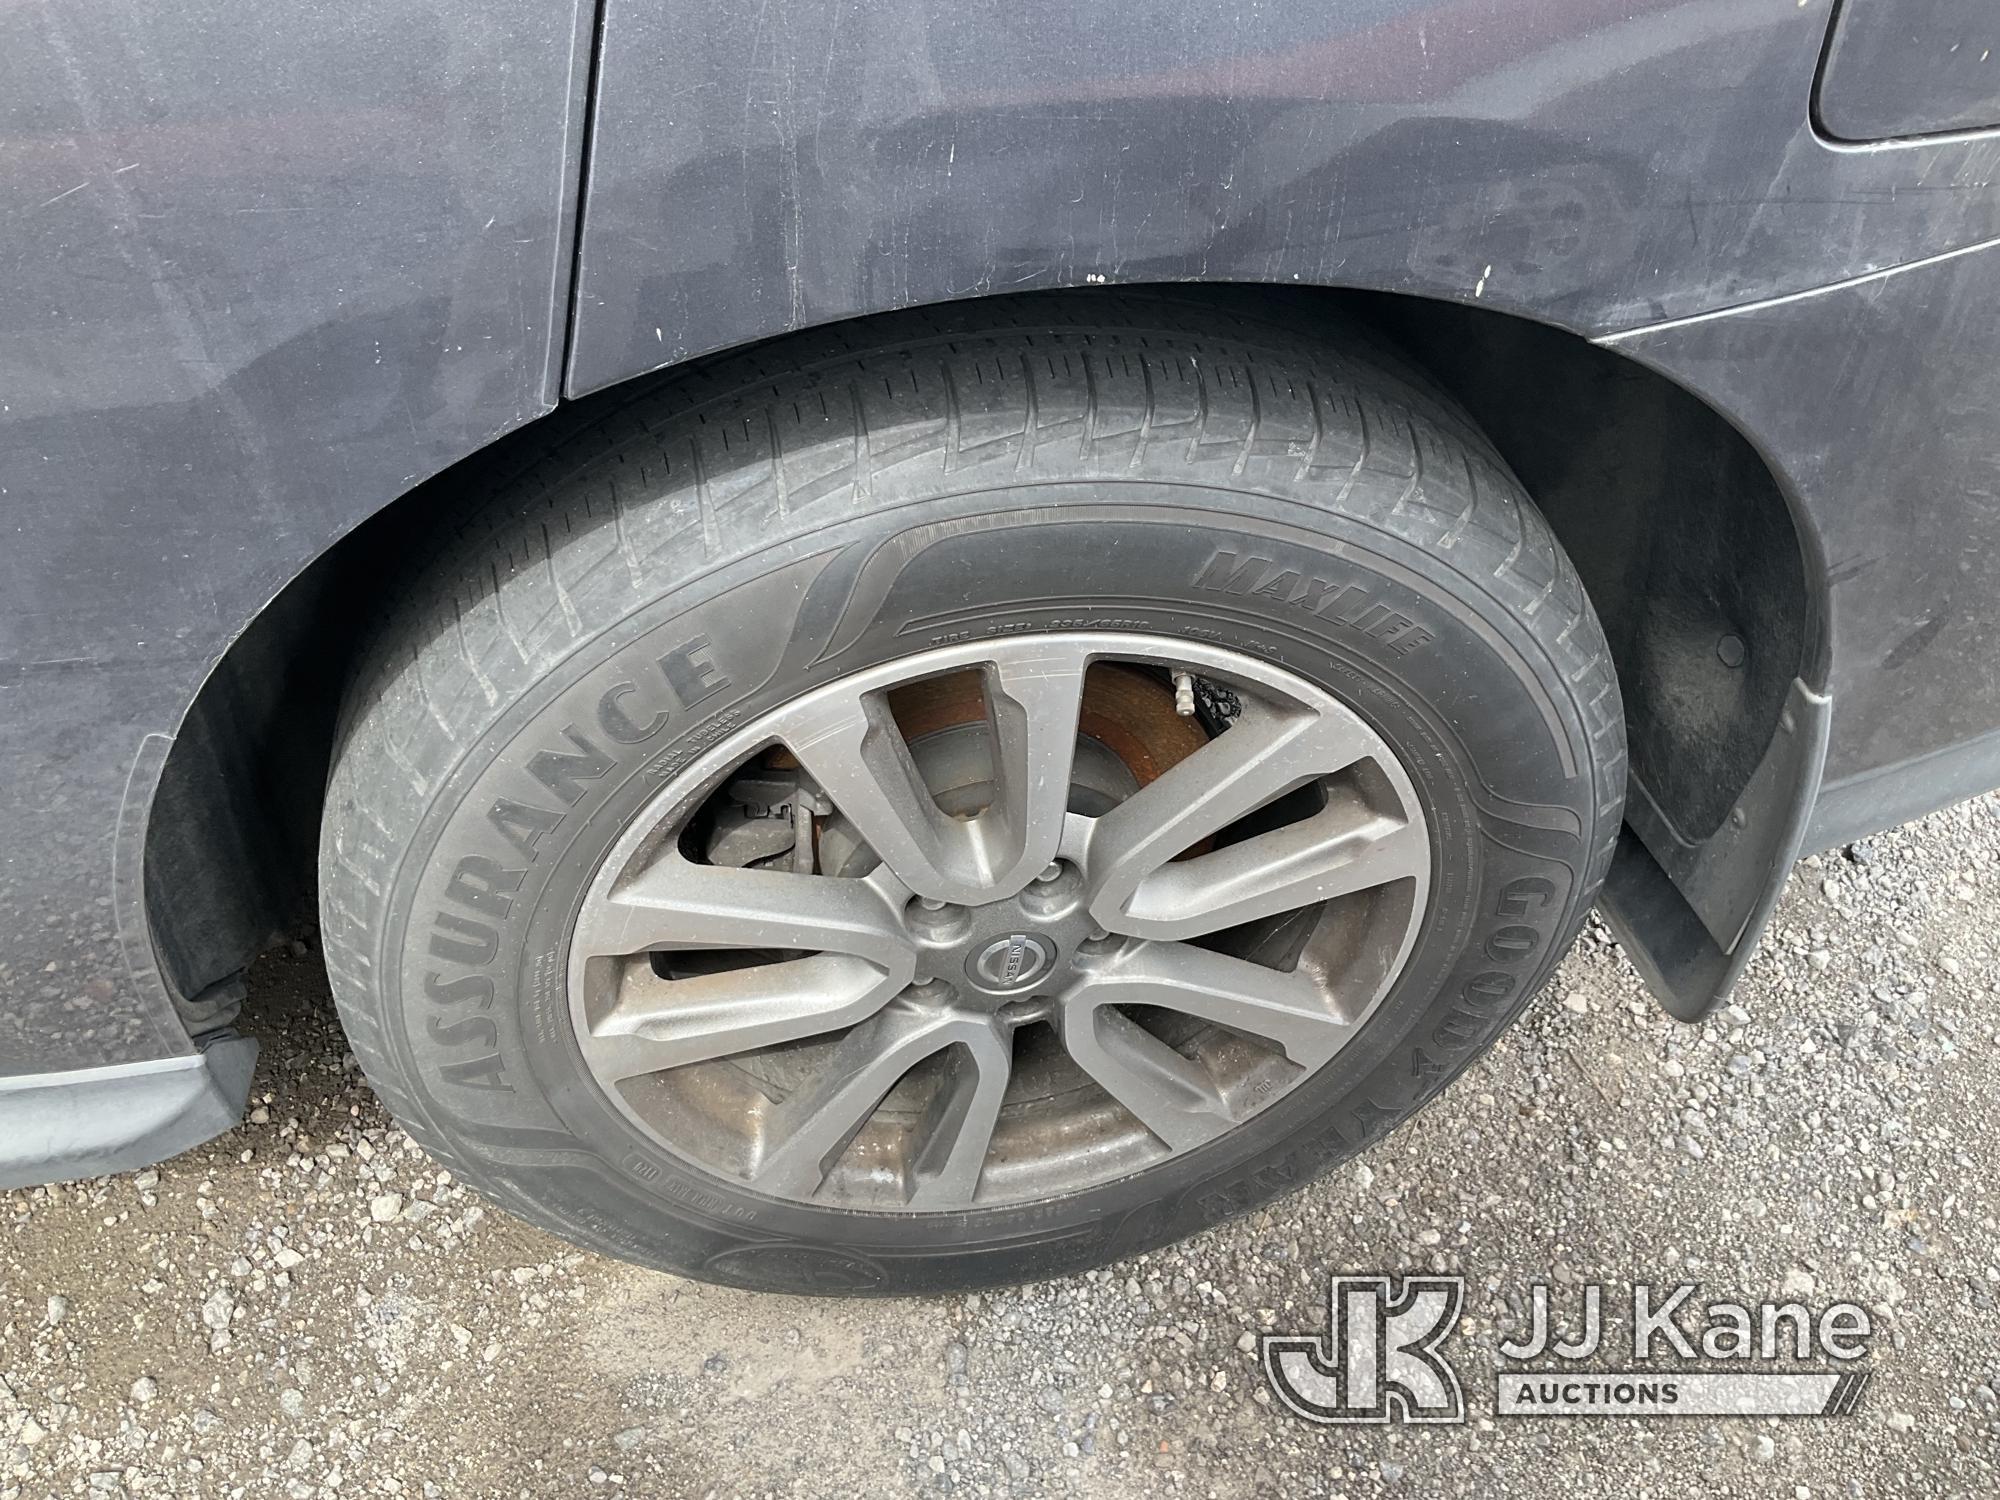 (Jurupa Valley, CA) 2014 Nissan Pathfinder 4-Door Sport Utility Vehicle Runs Does Not Move, Bad Tran